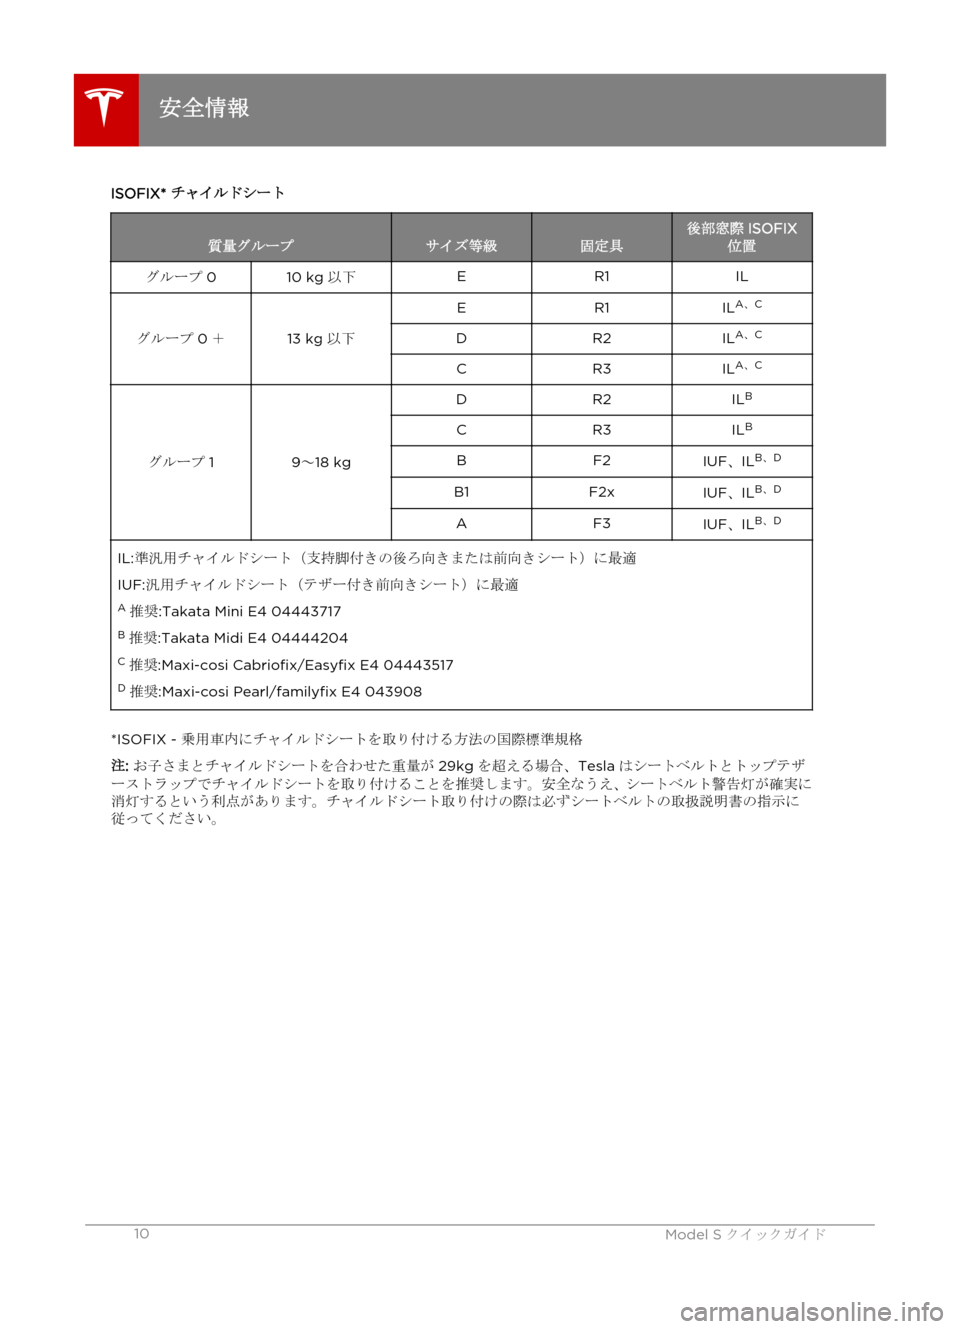 TESLA MODEL S 2015  クイックガイド (in Japanese) ISOFIX* チャイルドシート
質量グループサイズ等級固定具後部窓際 ISOFIX
位置グループ 010 kg以下ER1IL
グループ 0＋13 kg 以下
ER1ILA
、 CDR2IL A
、 CCR3IL A
、 C